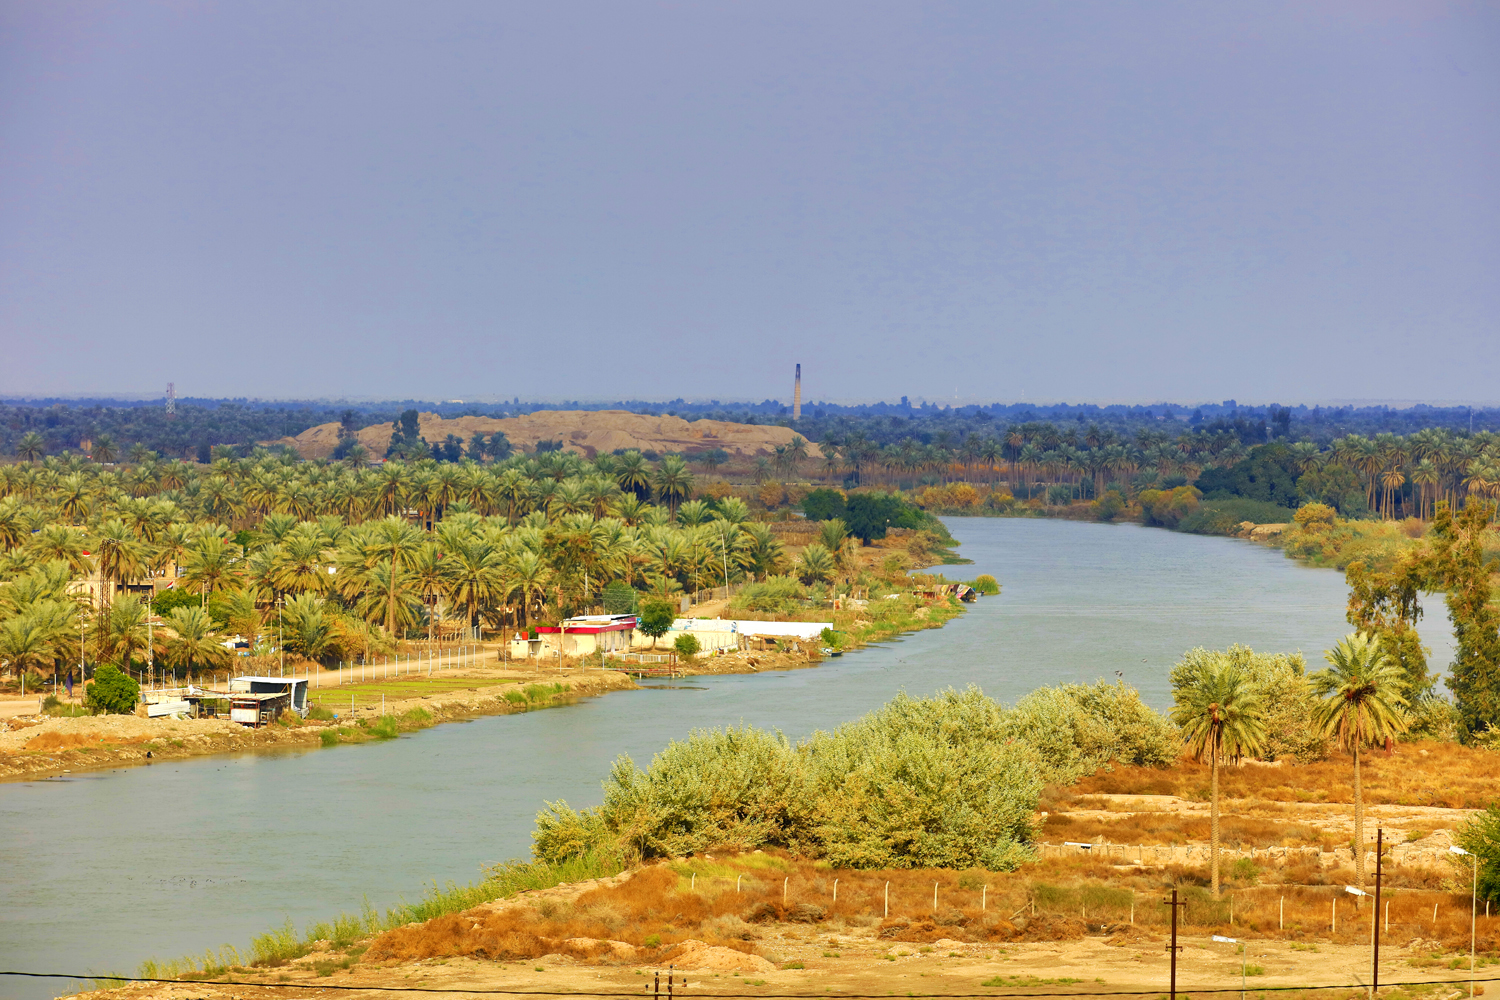 Euphrates